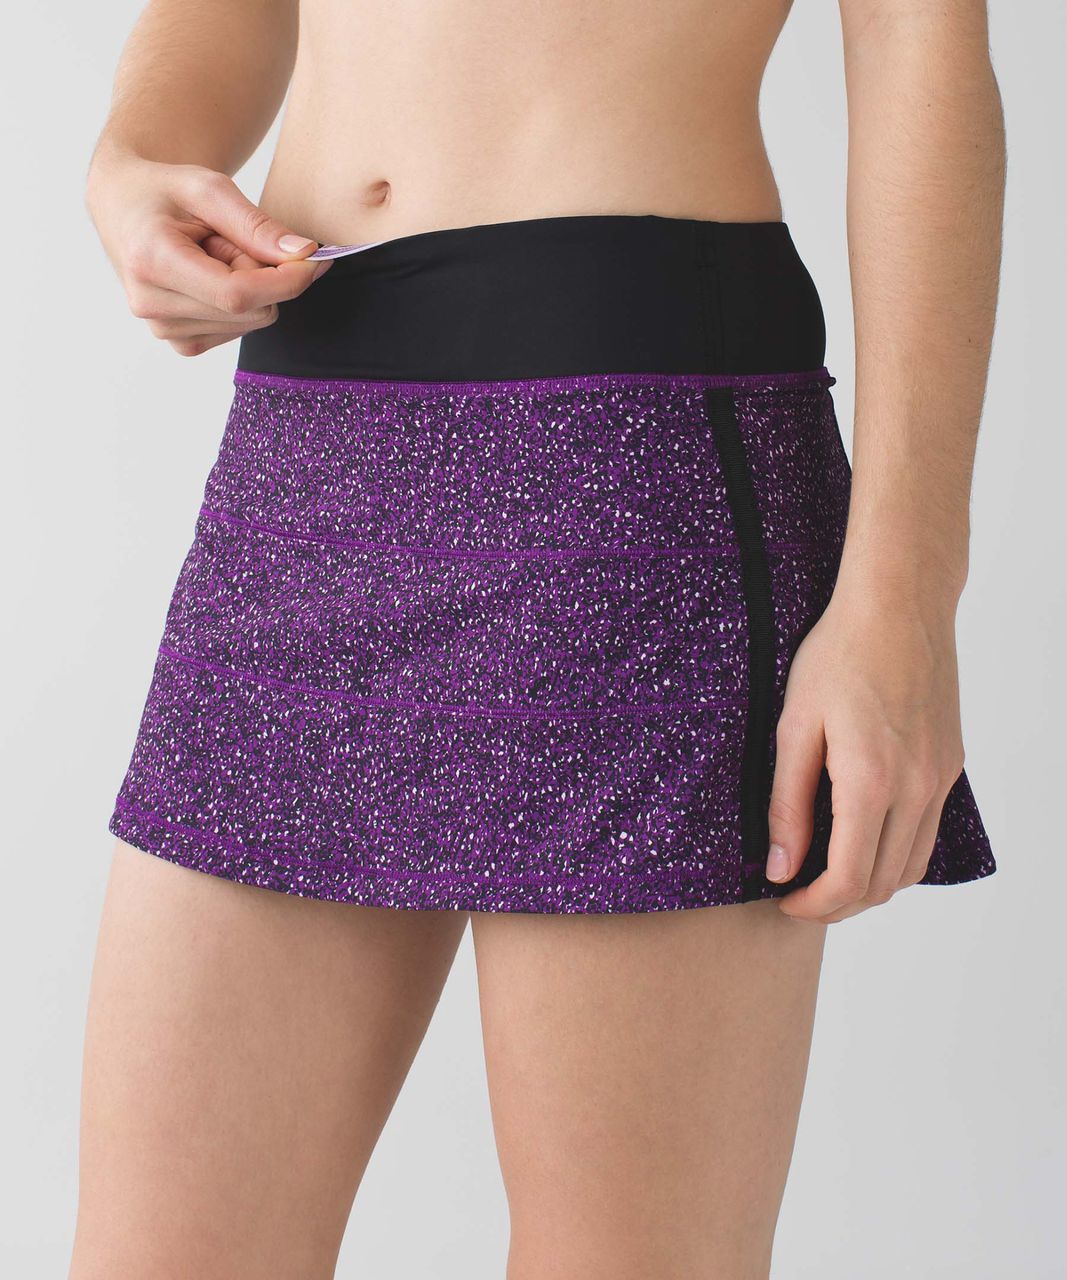 Lululemon Pace Rival Skirt II (Regular) *4-way Stretch - Flashback Static Powdered Rose Tender Violet / Black